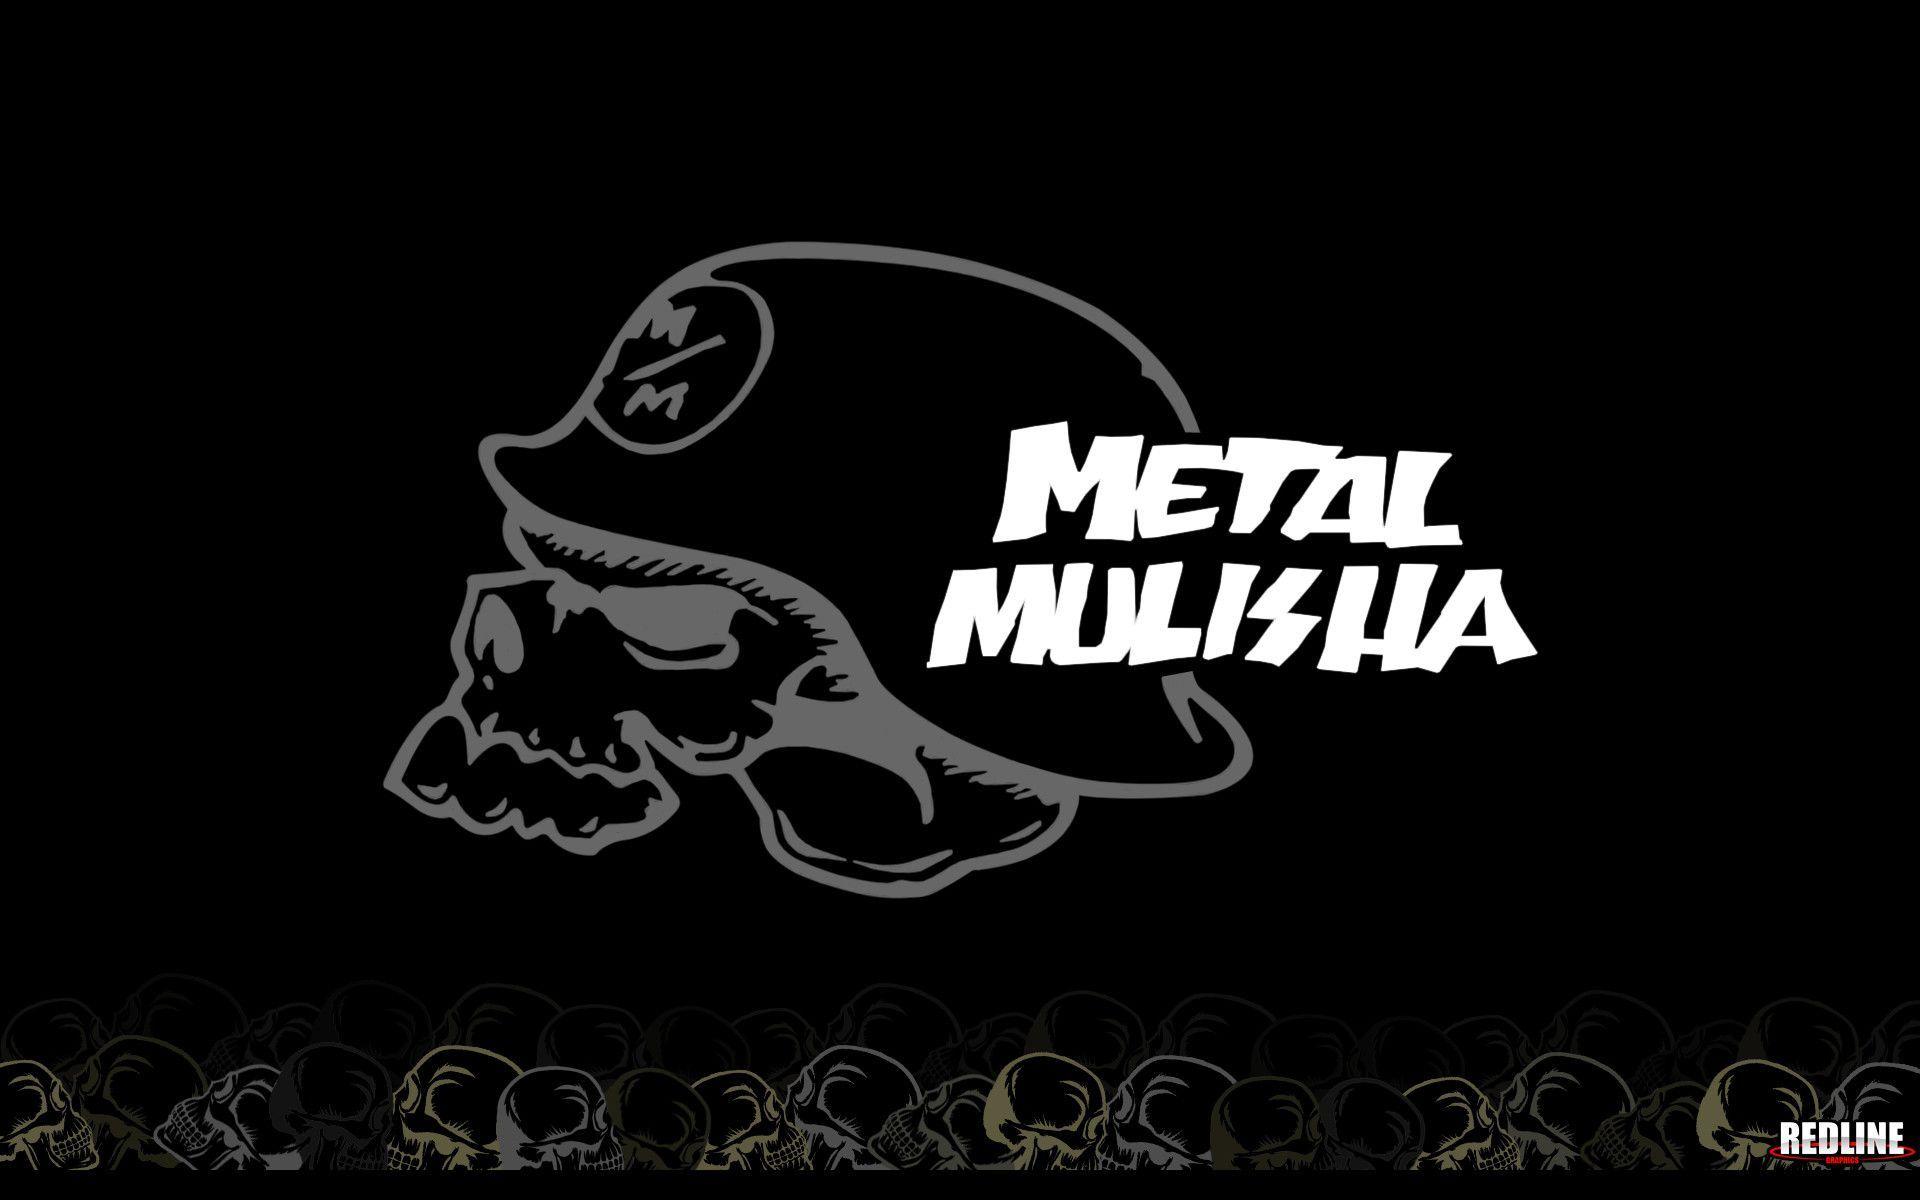 Metal Mulisha Logo Wallpapers HD - Wallpaper Cave.